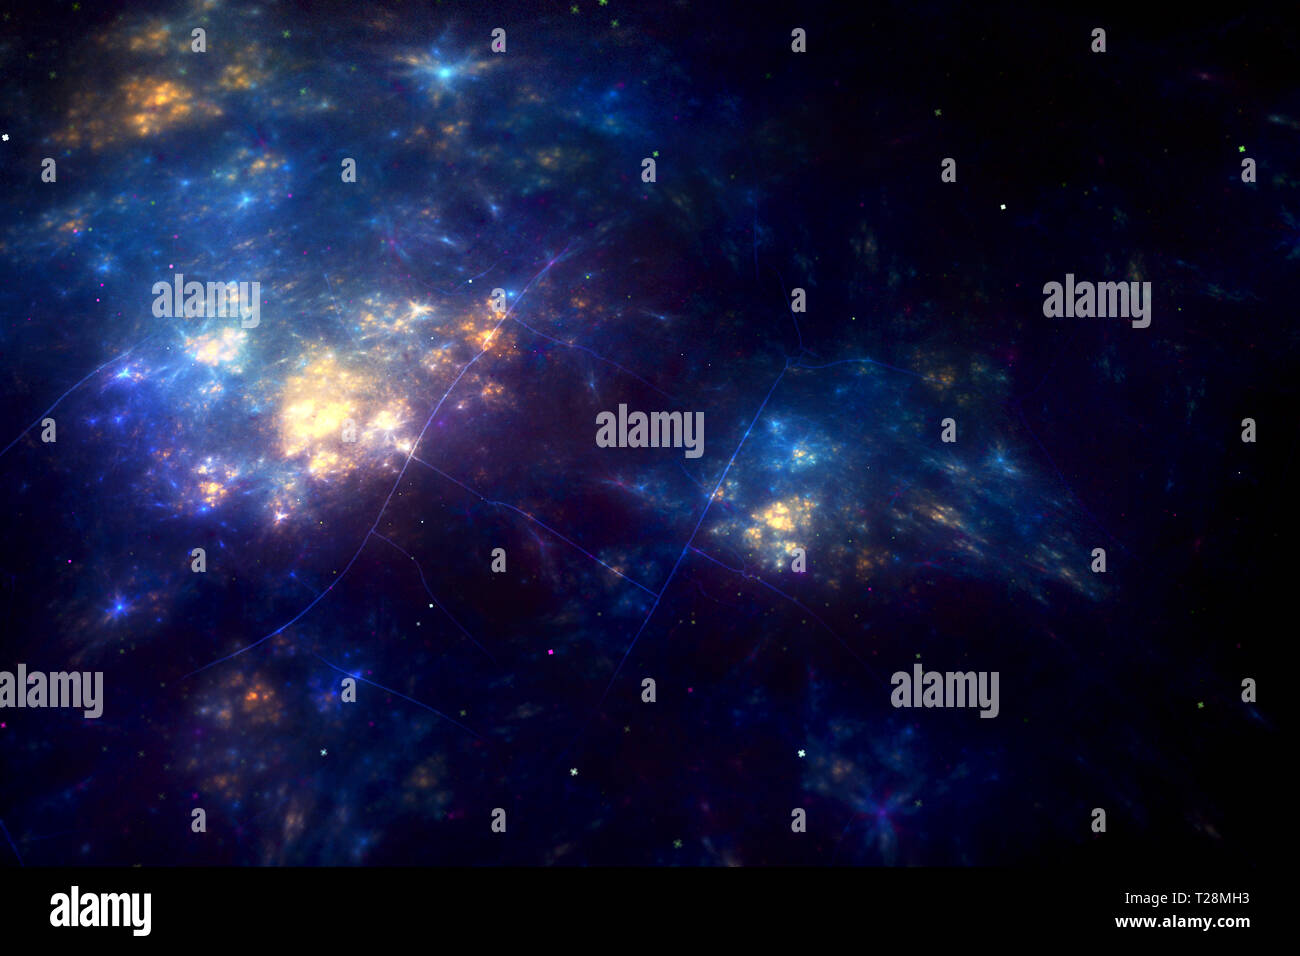 Abstract Artistic Dark Multicolored Galaxy With Bright Stars